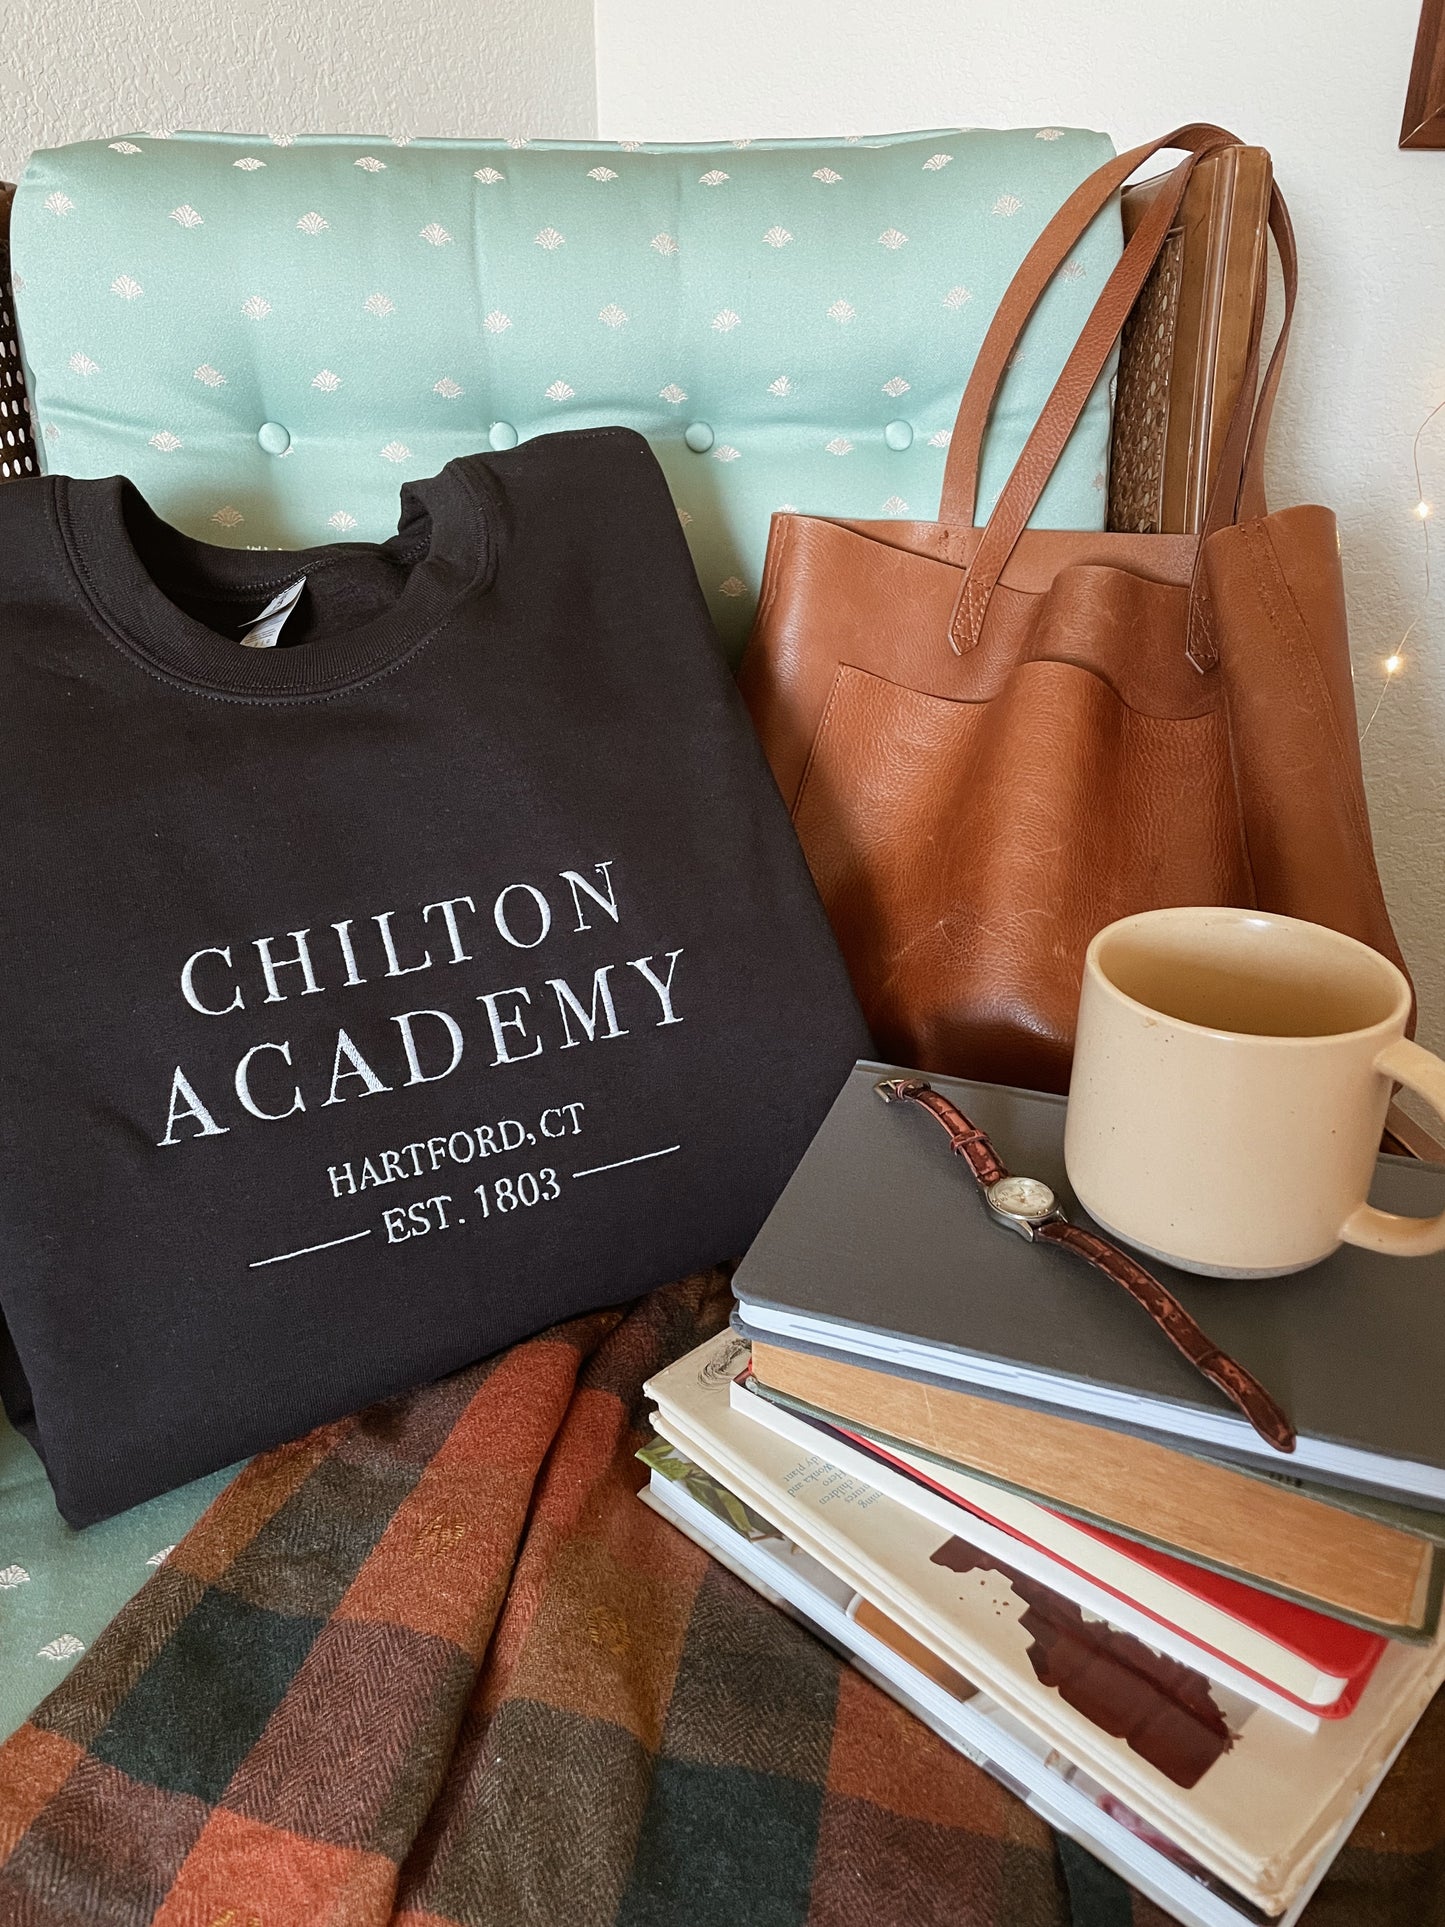 Chilton Academy Embroidered Sweatshirt